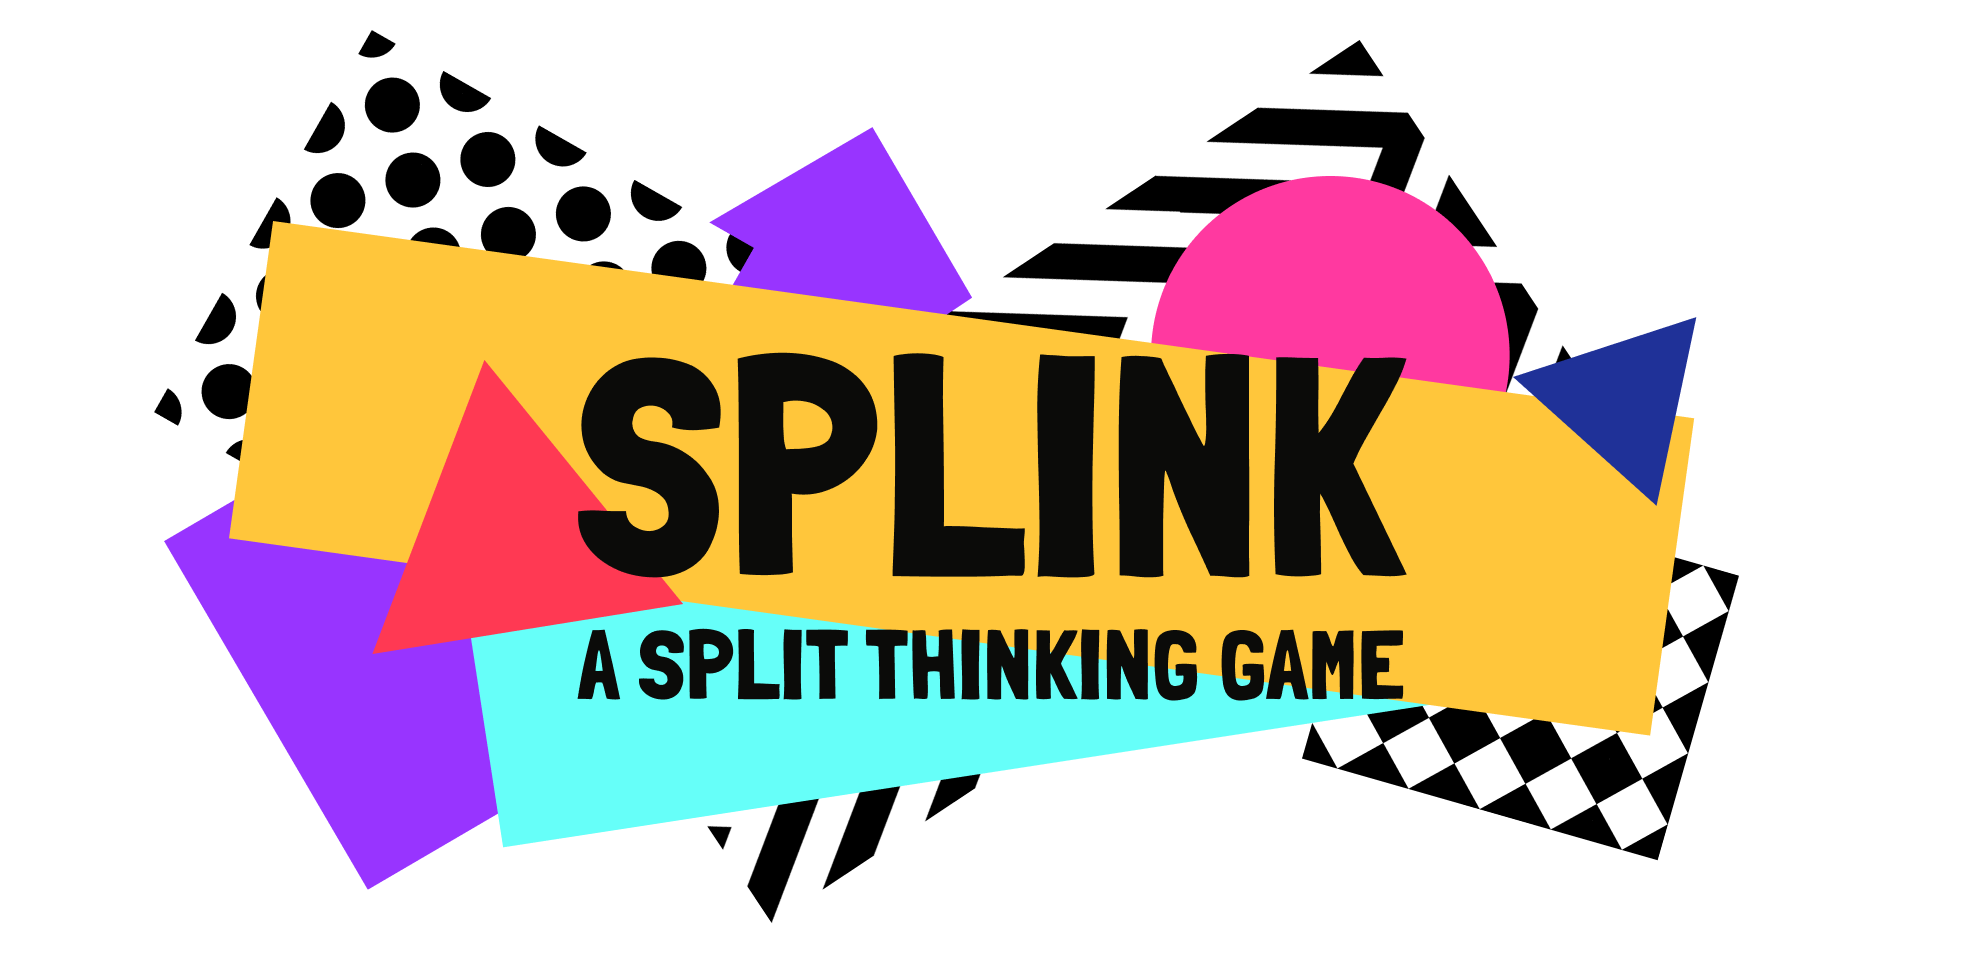 Splink: A Split Thinking Game